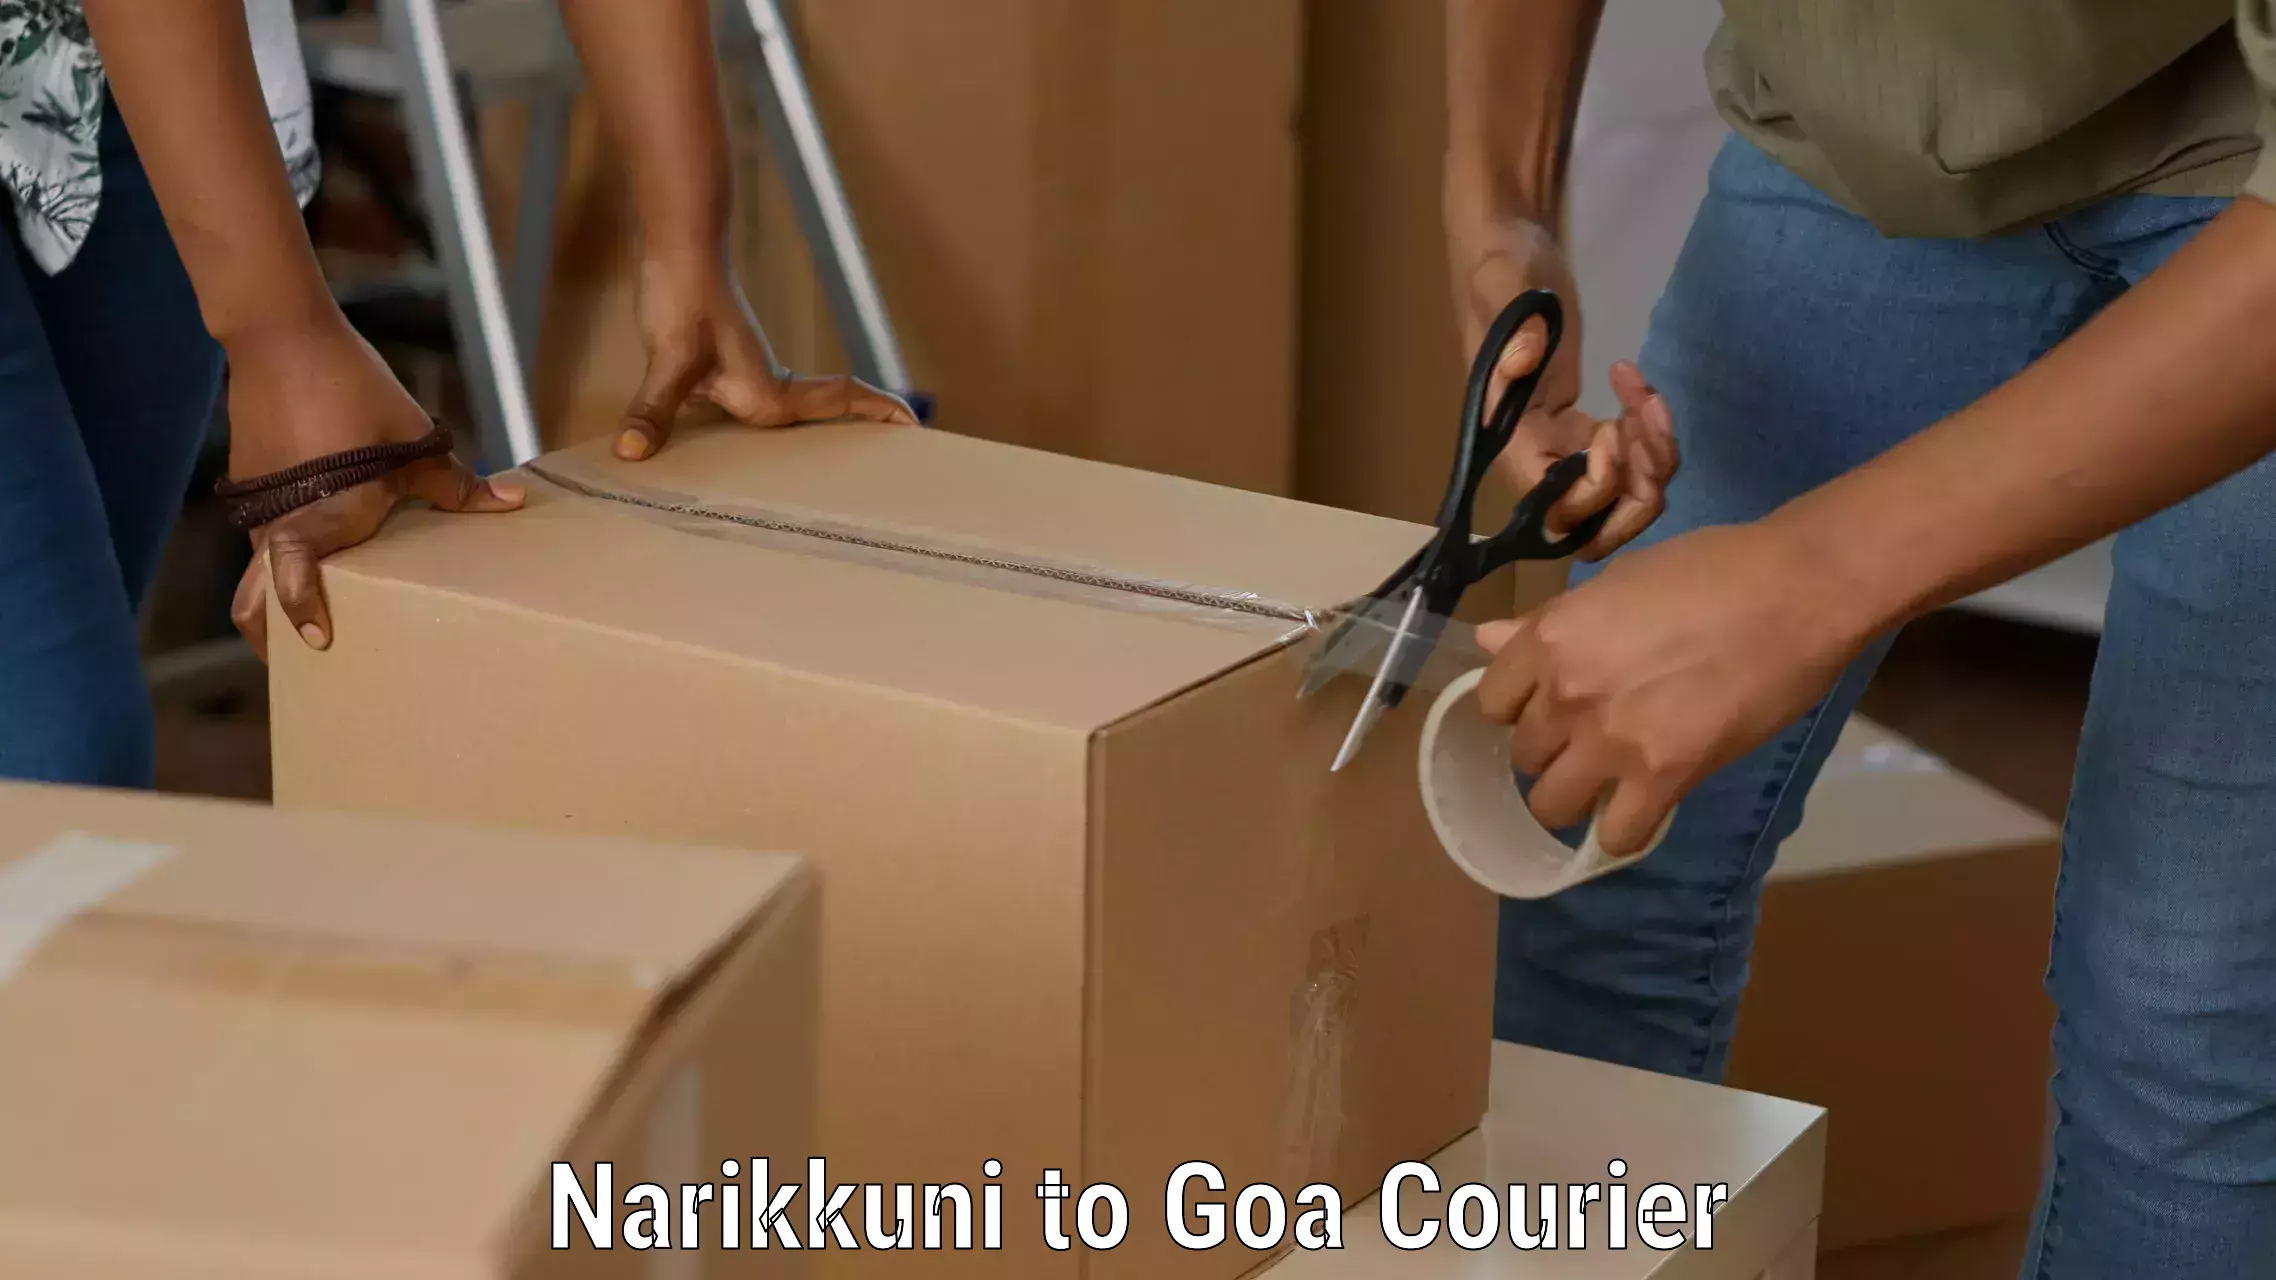 Courier service partnerships Narikkuni to Goa